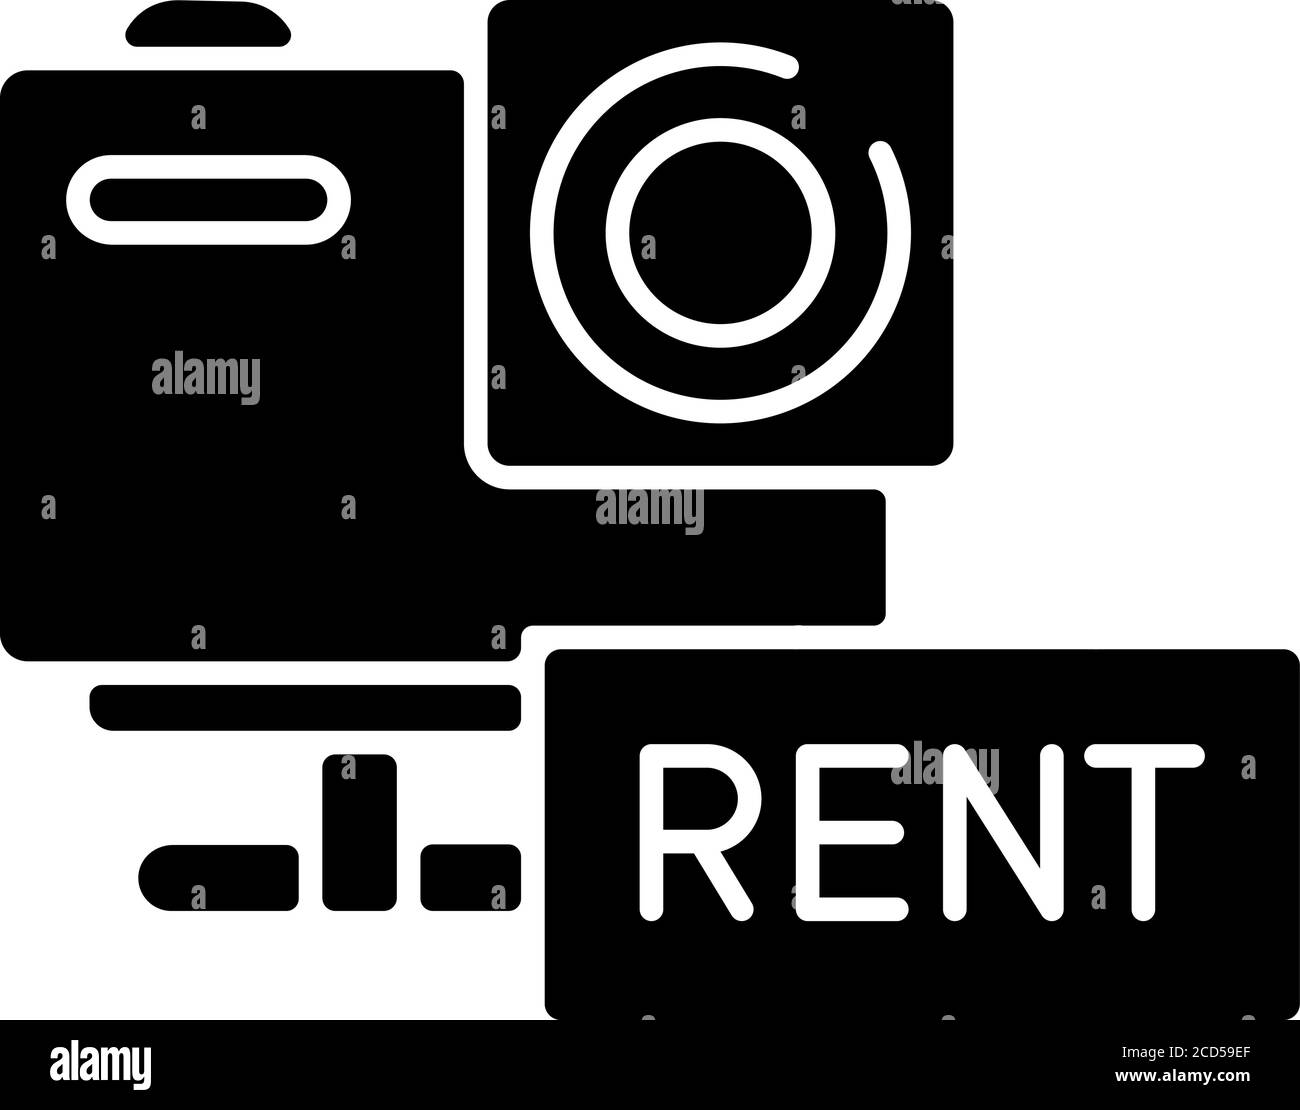 Action camera rental black glyph icon Stock Vector